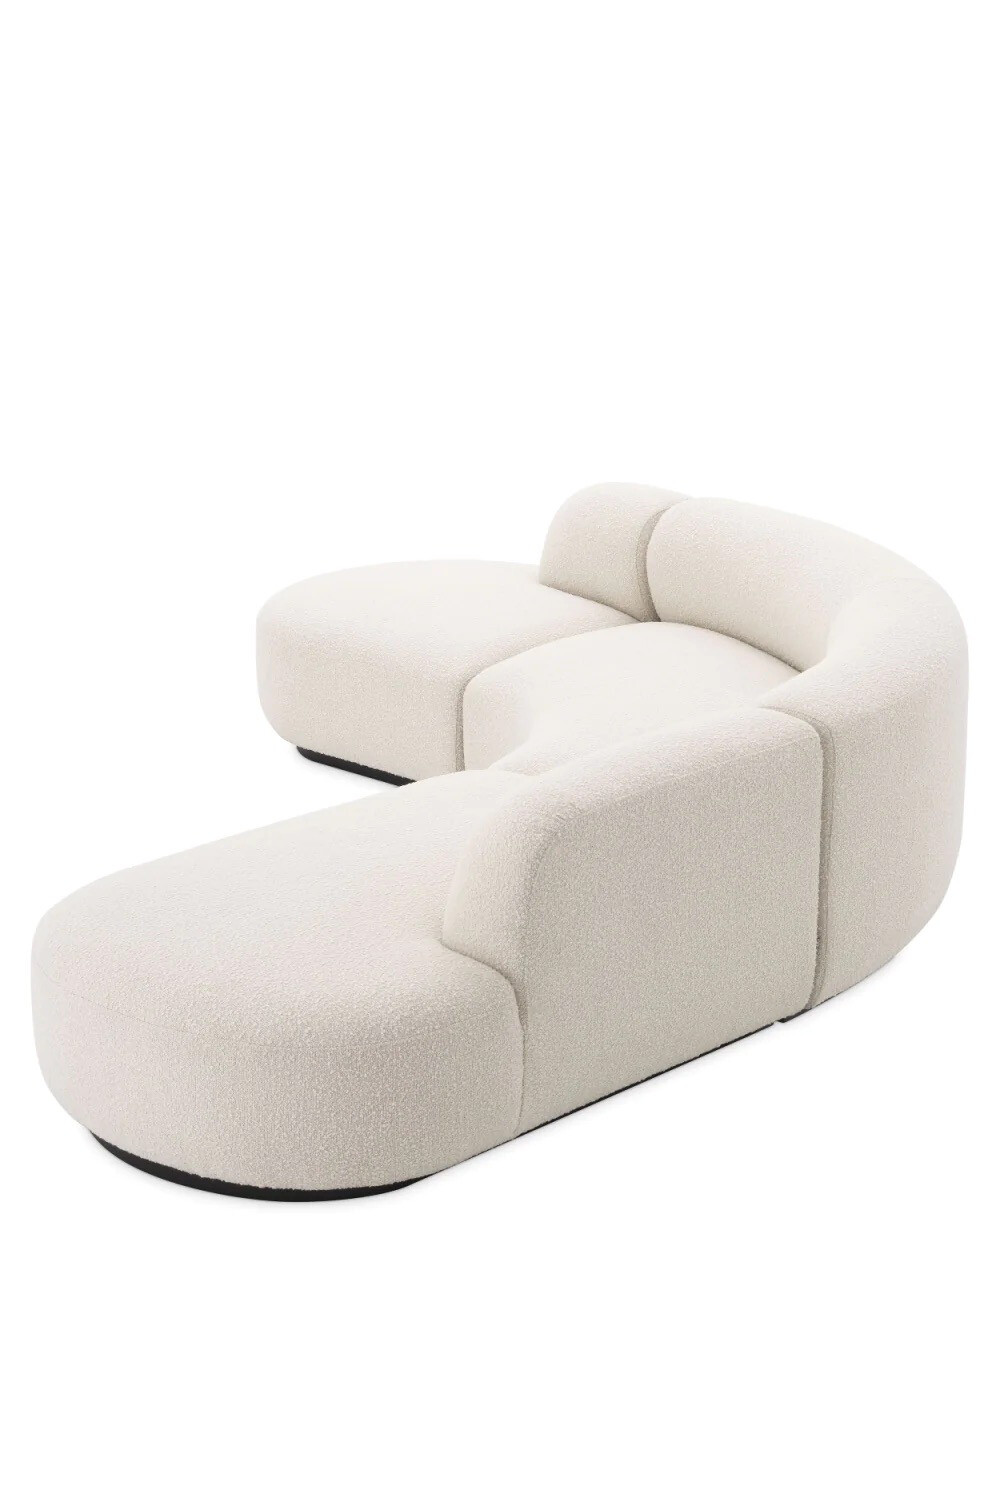 Luxury Leather High Quality Sofa